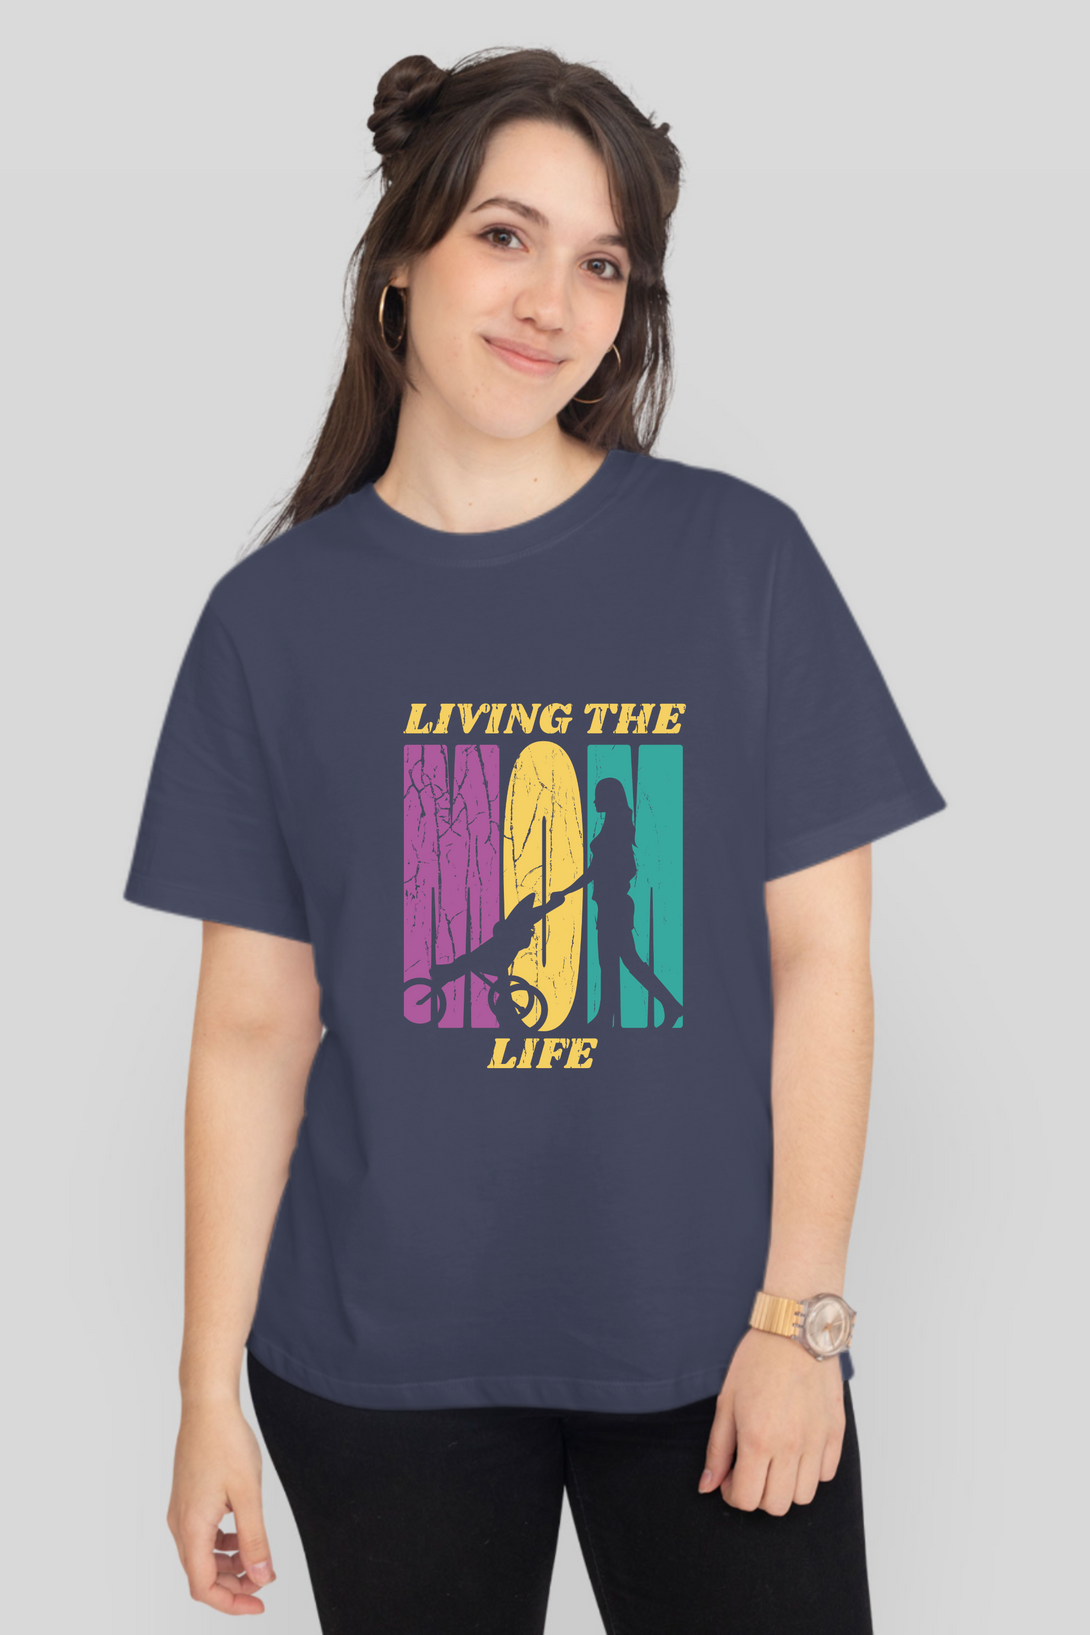 Mom Life Journey Printed T-Shirt For Women - WowWaves - 11